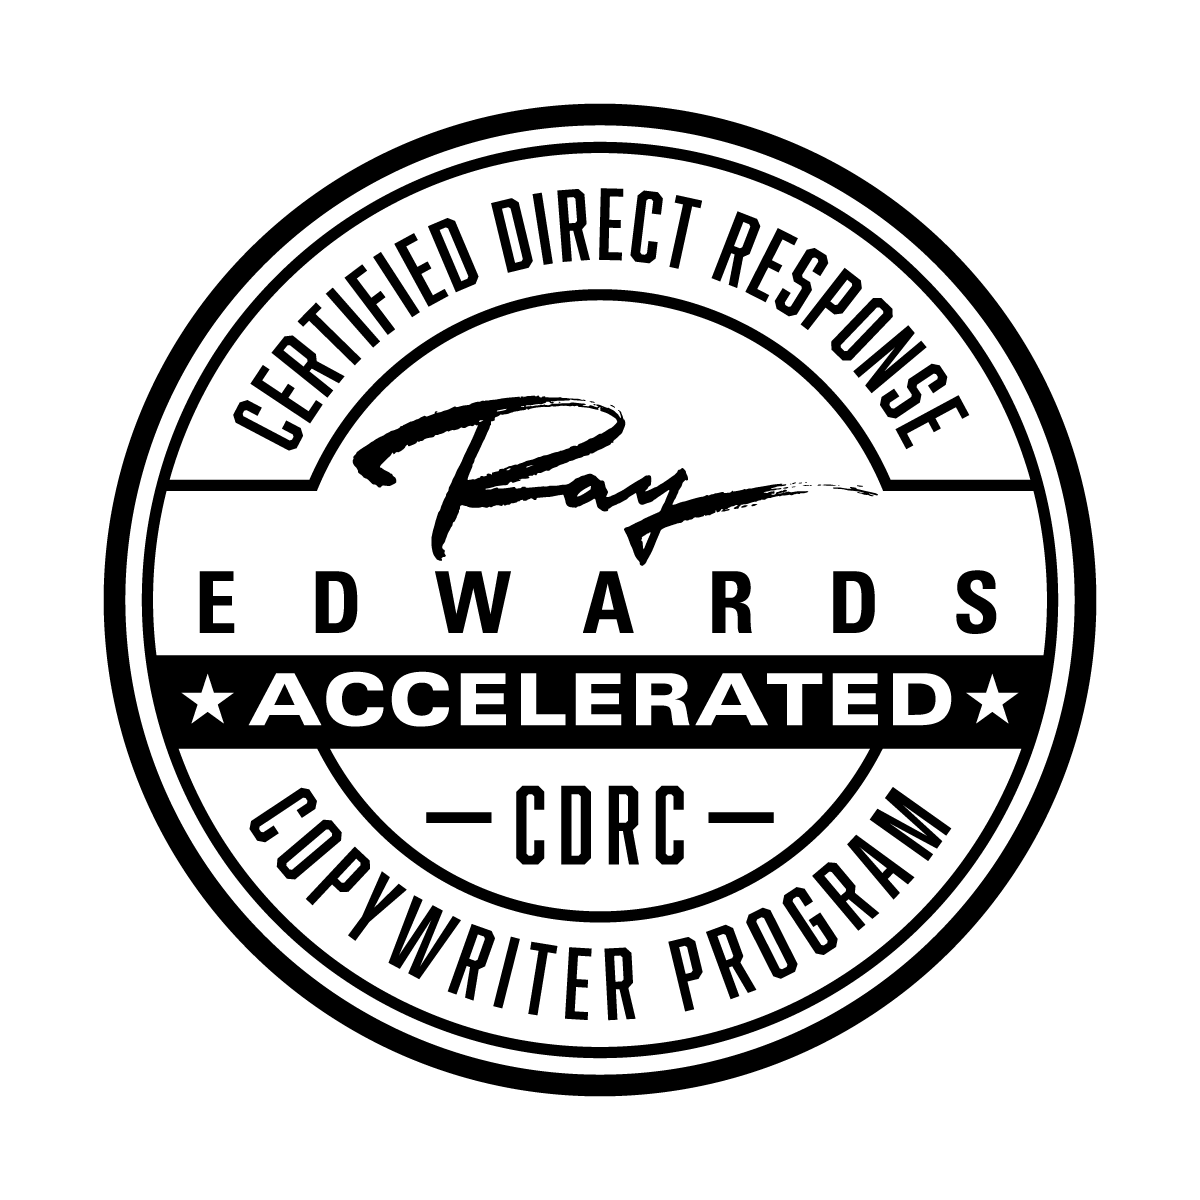 Ray Edwards Certified Direct Response Copywriter Program 